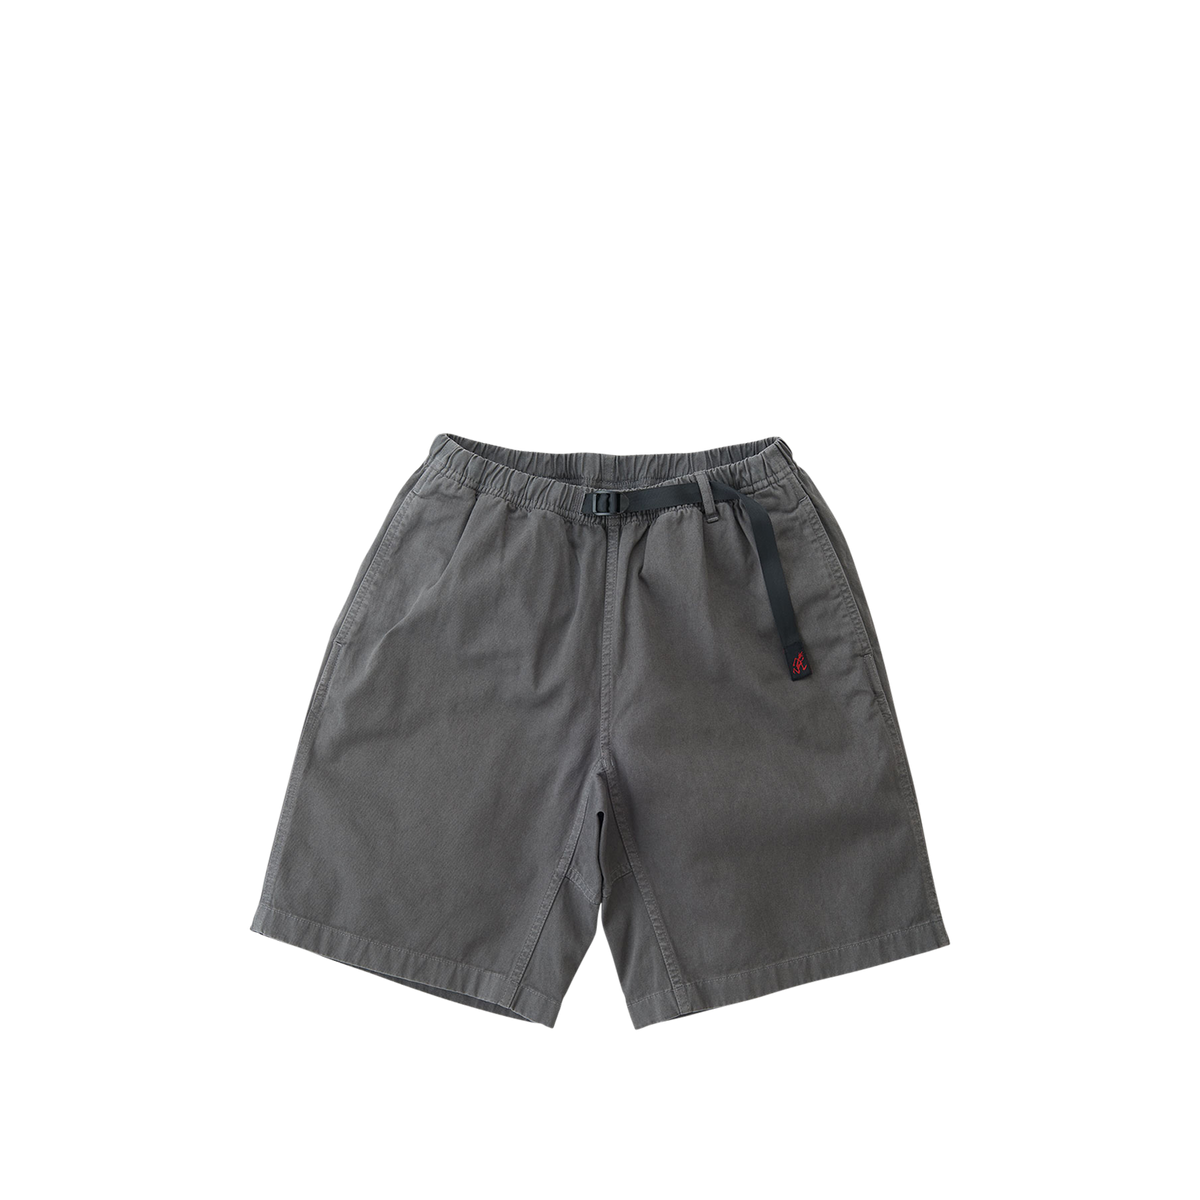 G-Shorts - Charcoal